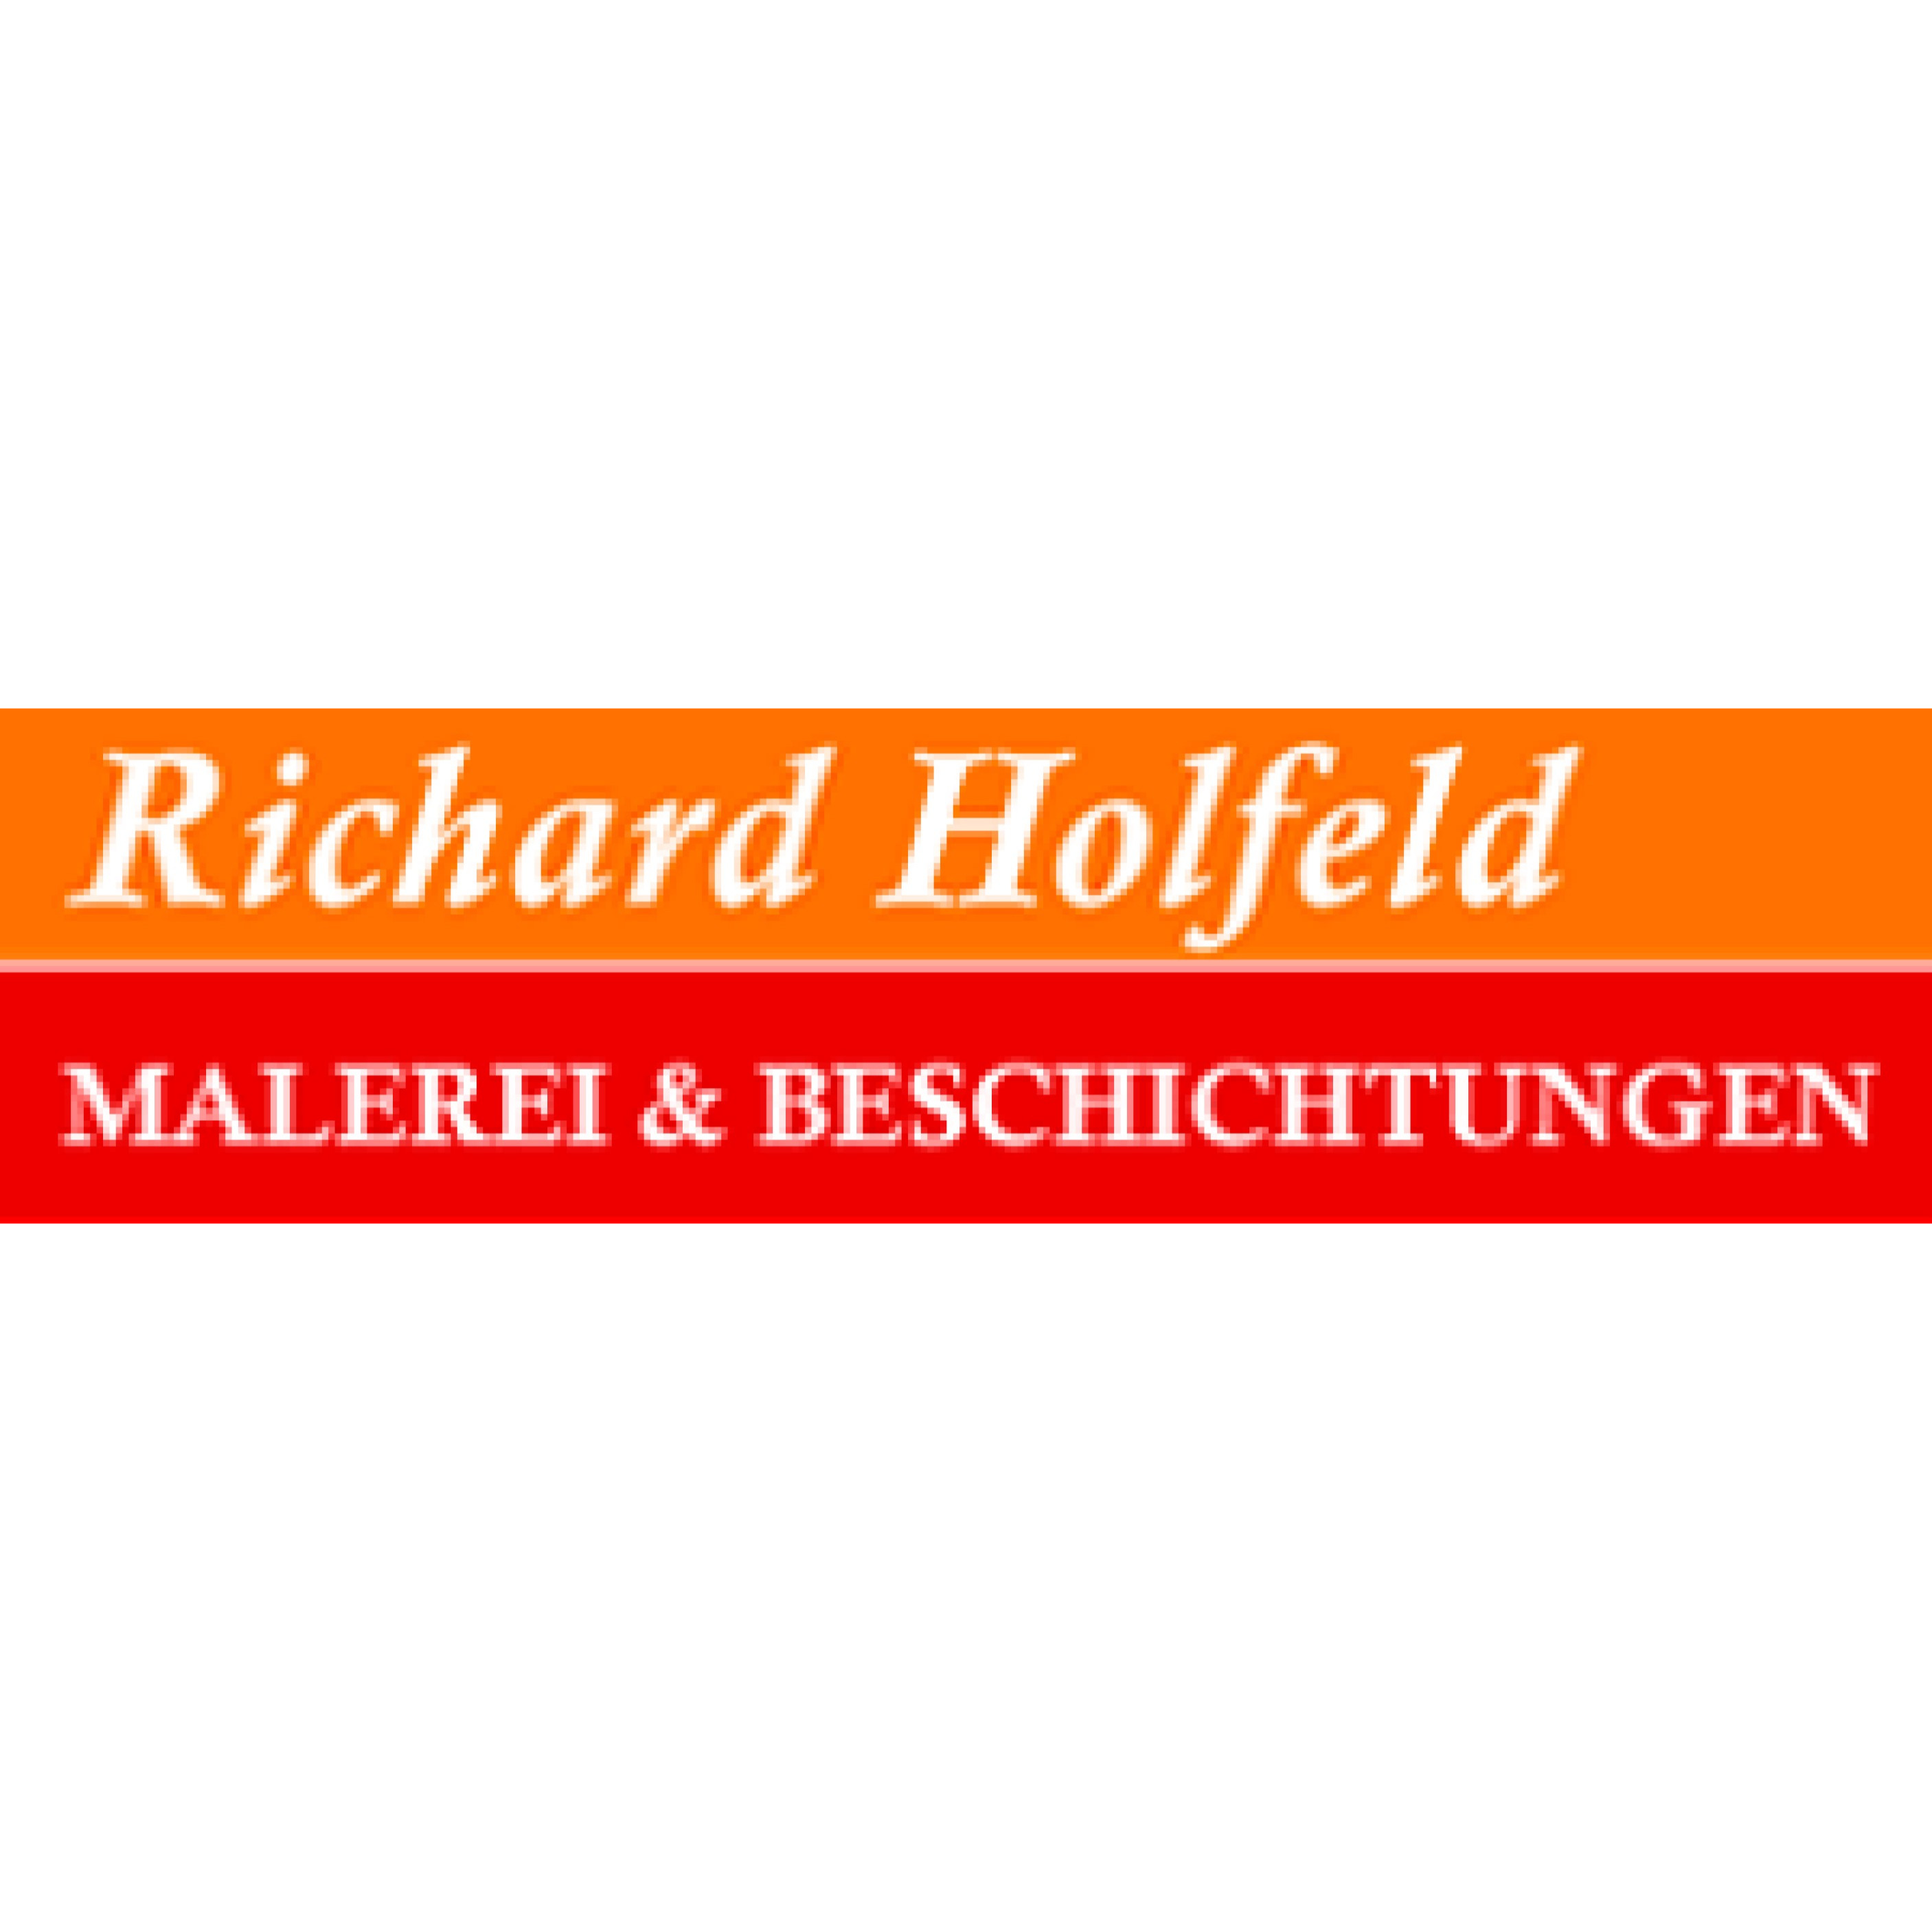 Richard Holfeld Firmenlogo